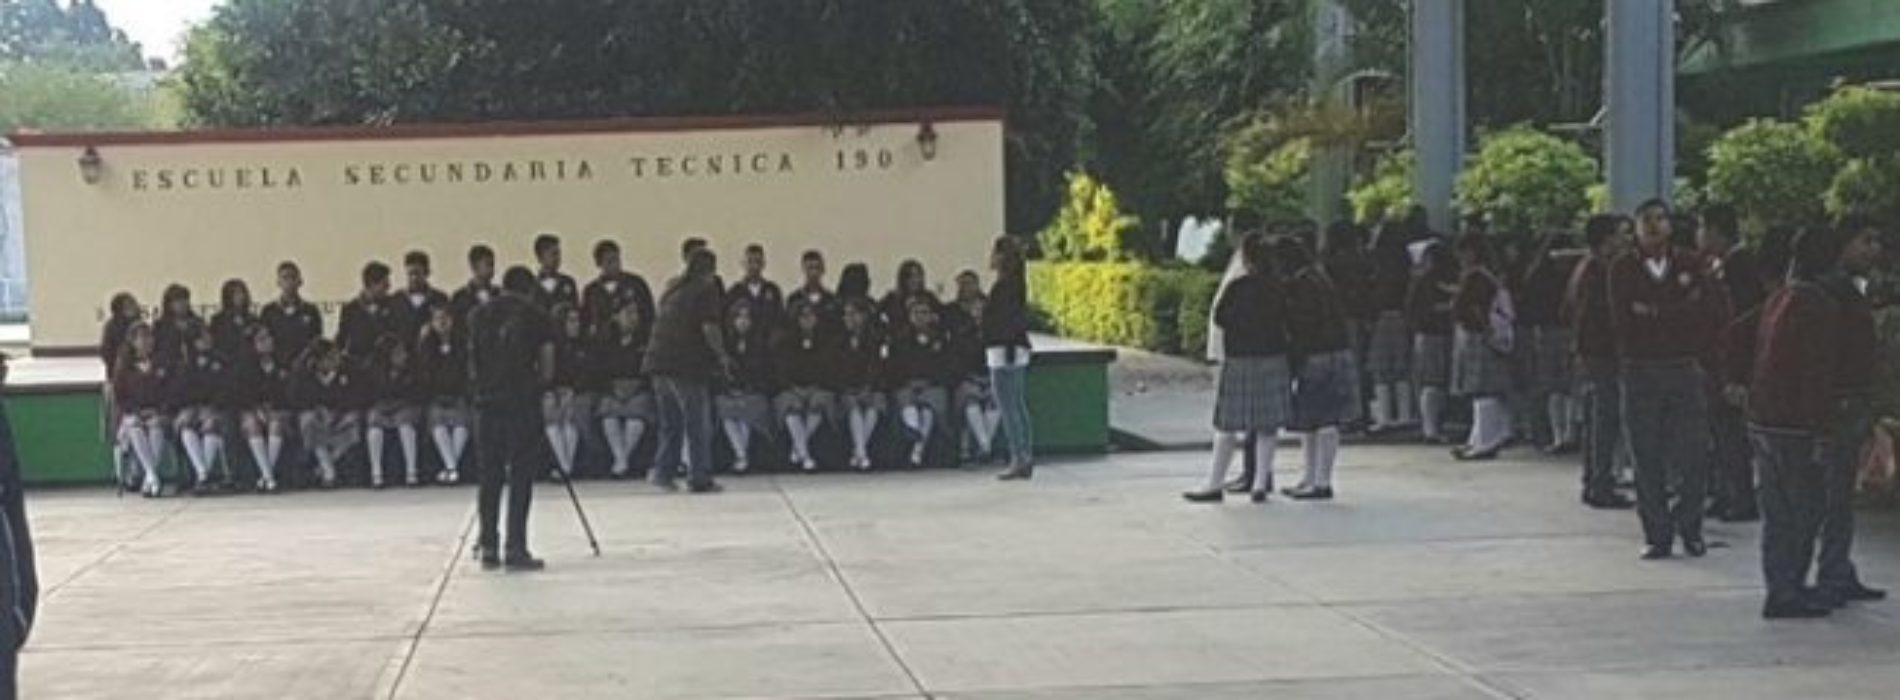 Desprecian profesores paro de la CNTE e inician clases en
Oaxaca